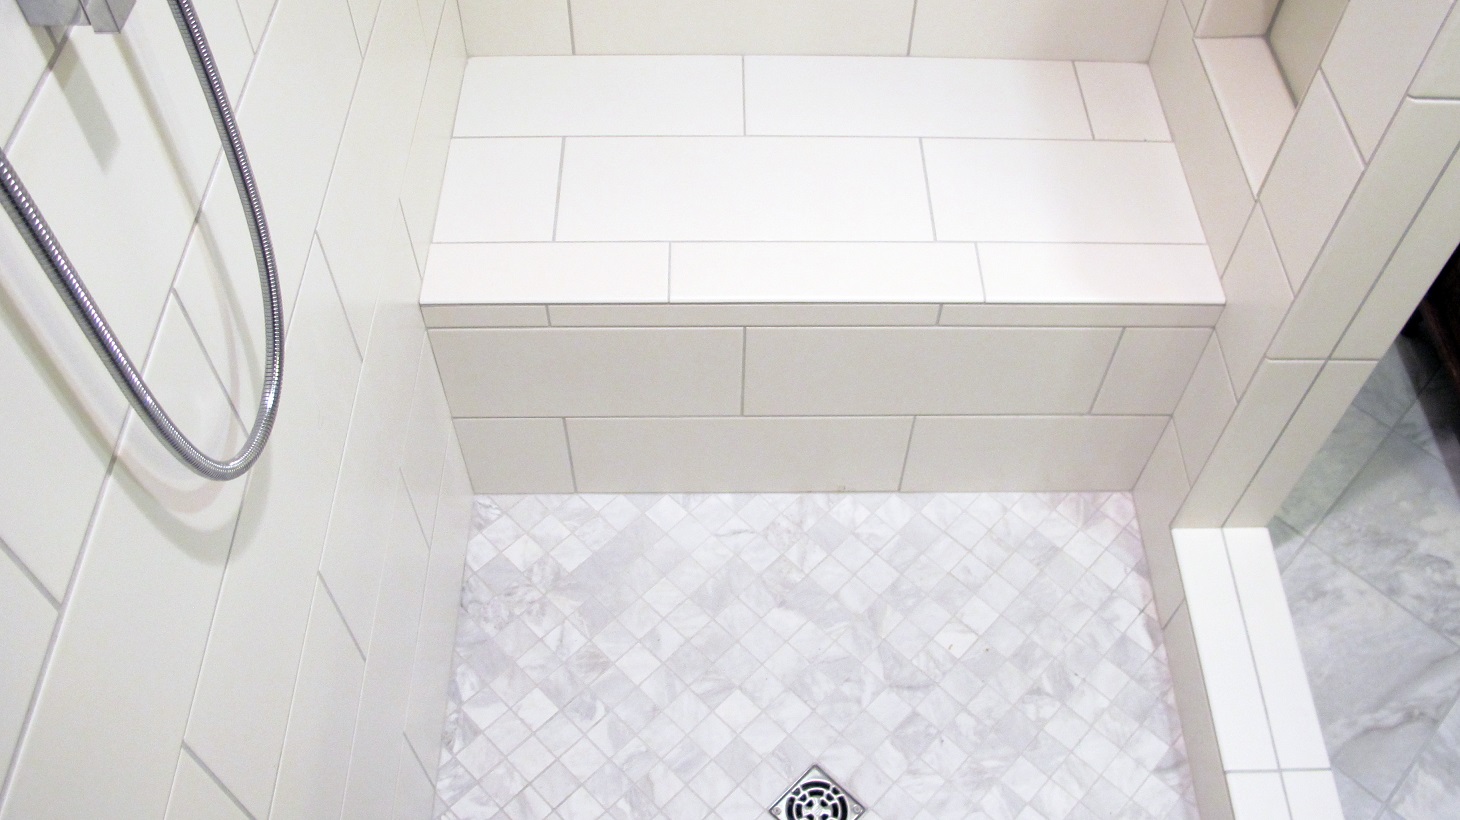 Steam shower bench mosaic pan drain subway white ceramic porcelain custom curb enclosed design tile marble mosaic mud floor walls 